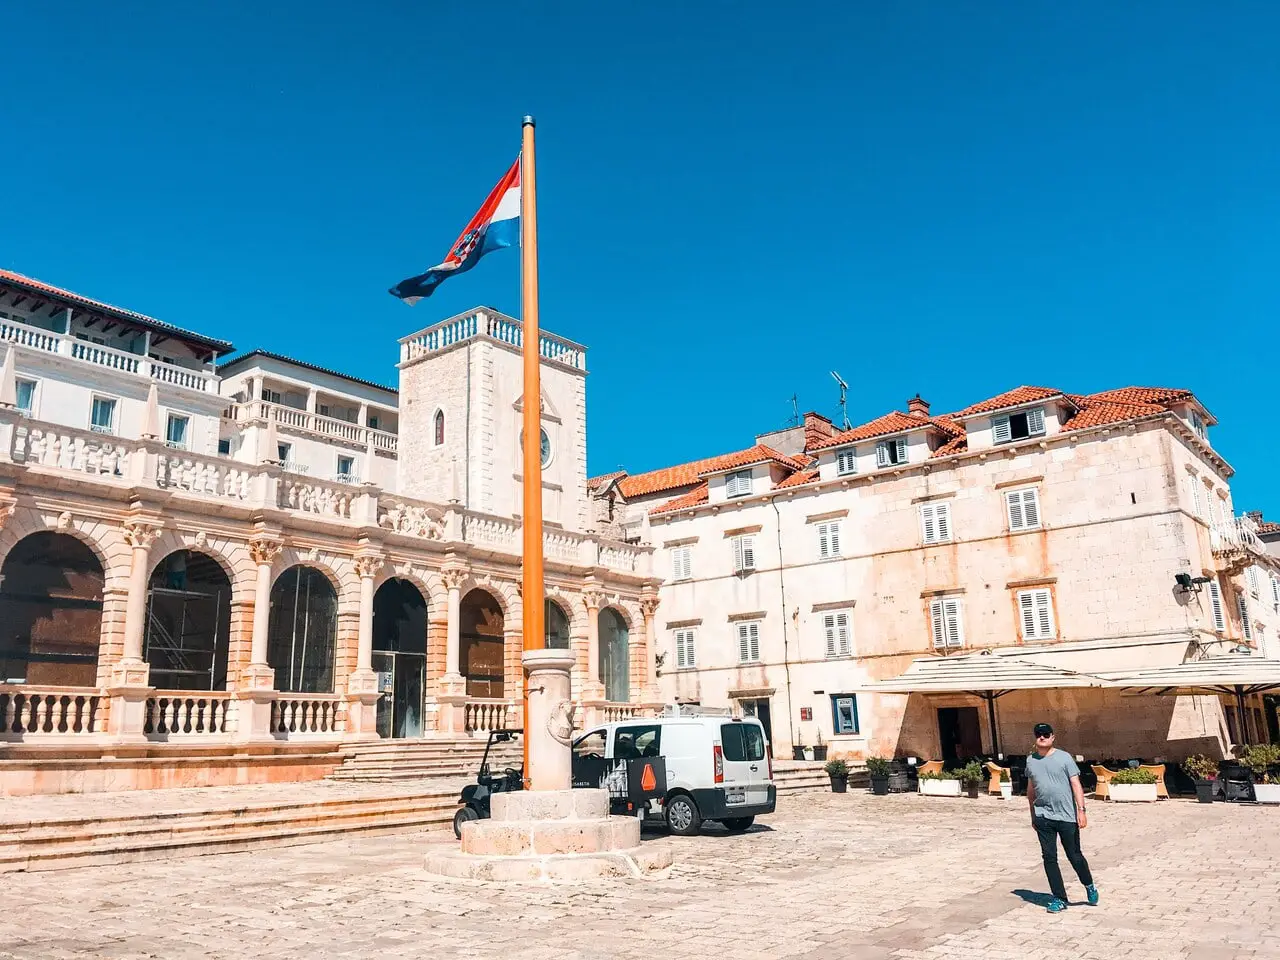 St Stephen's Square in one day in Hvar Croatia